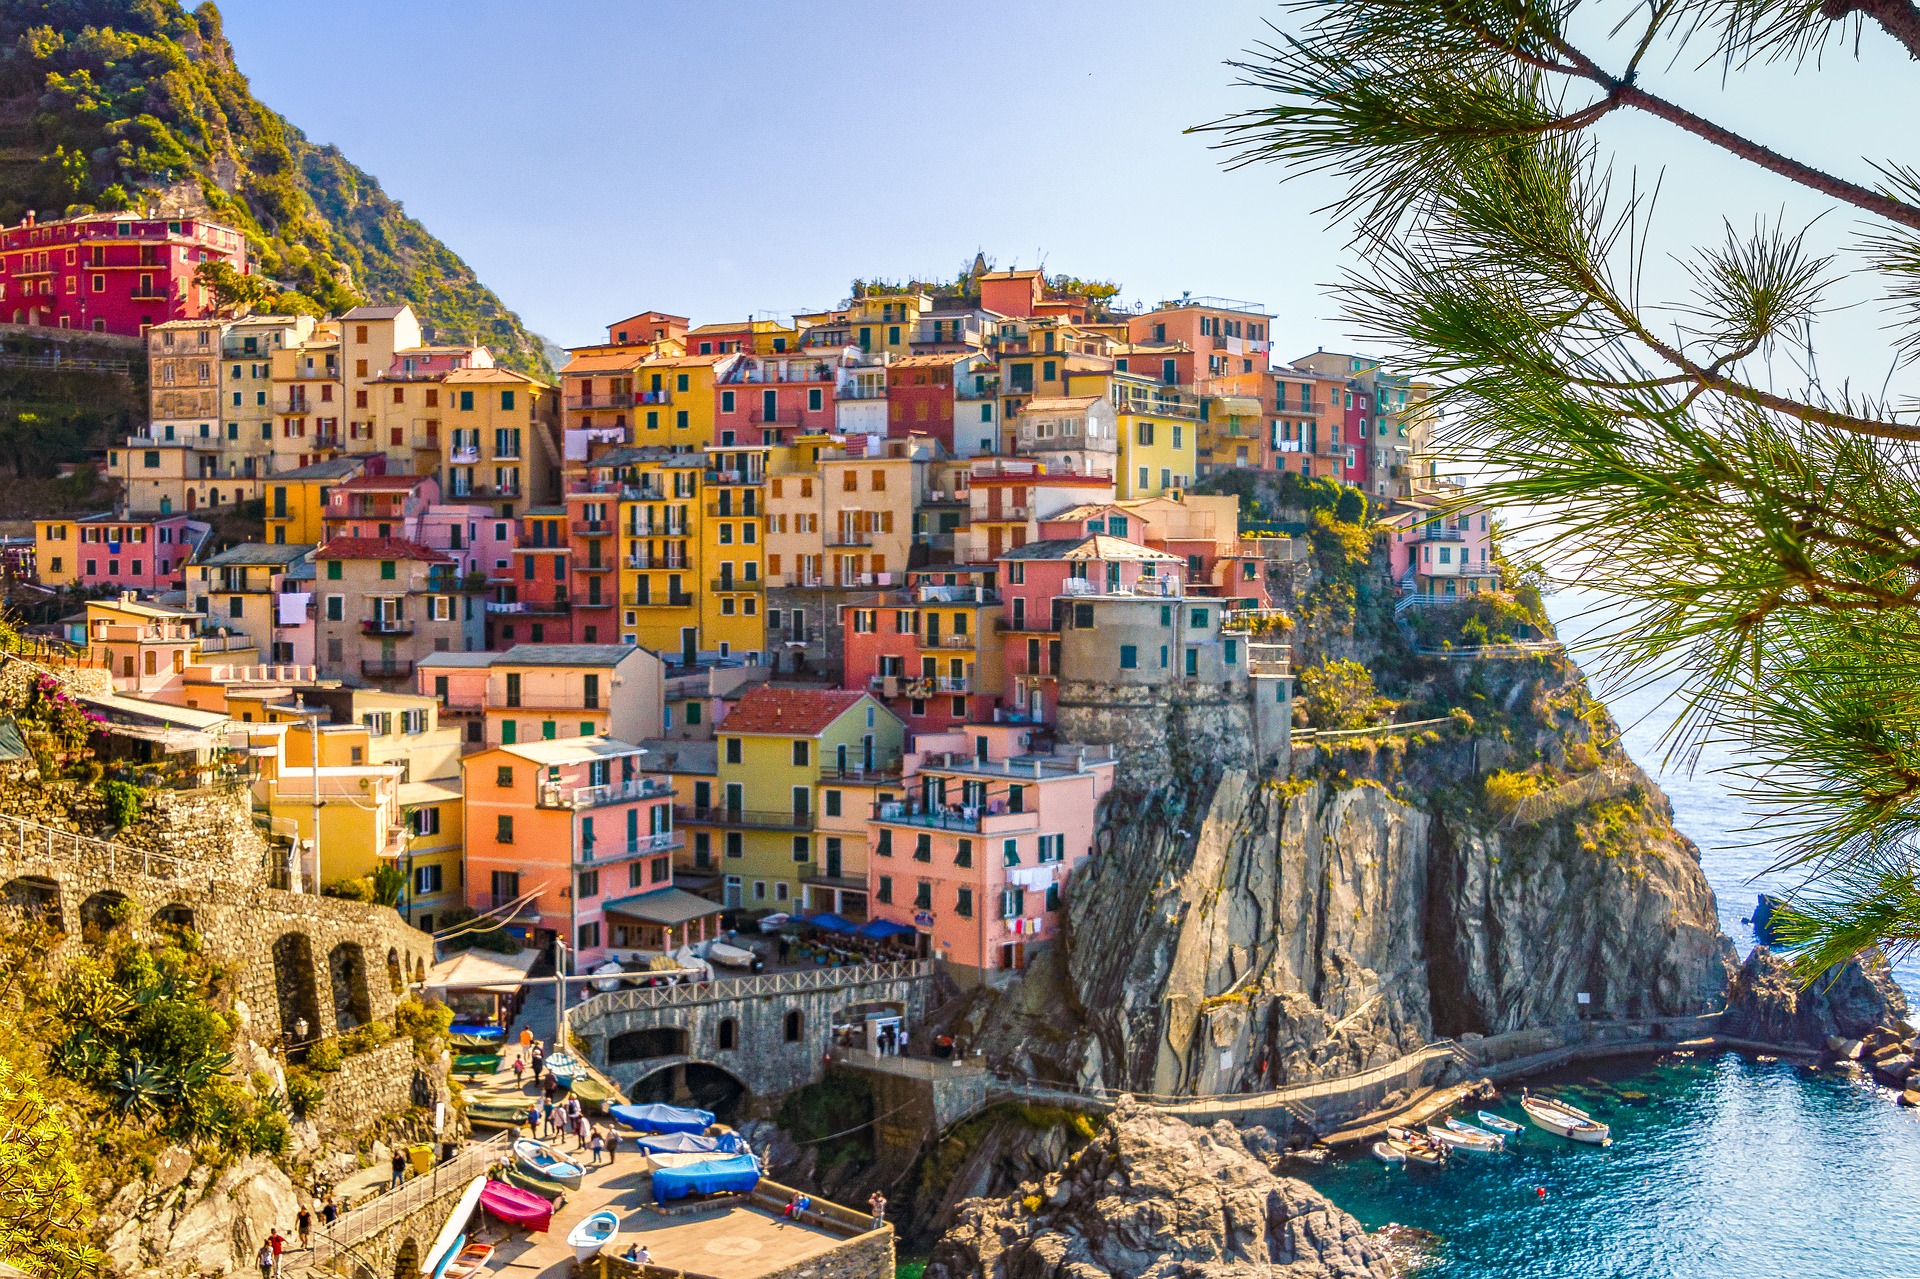 Италия с 1 марта снимает ограничения на въезд туристов